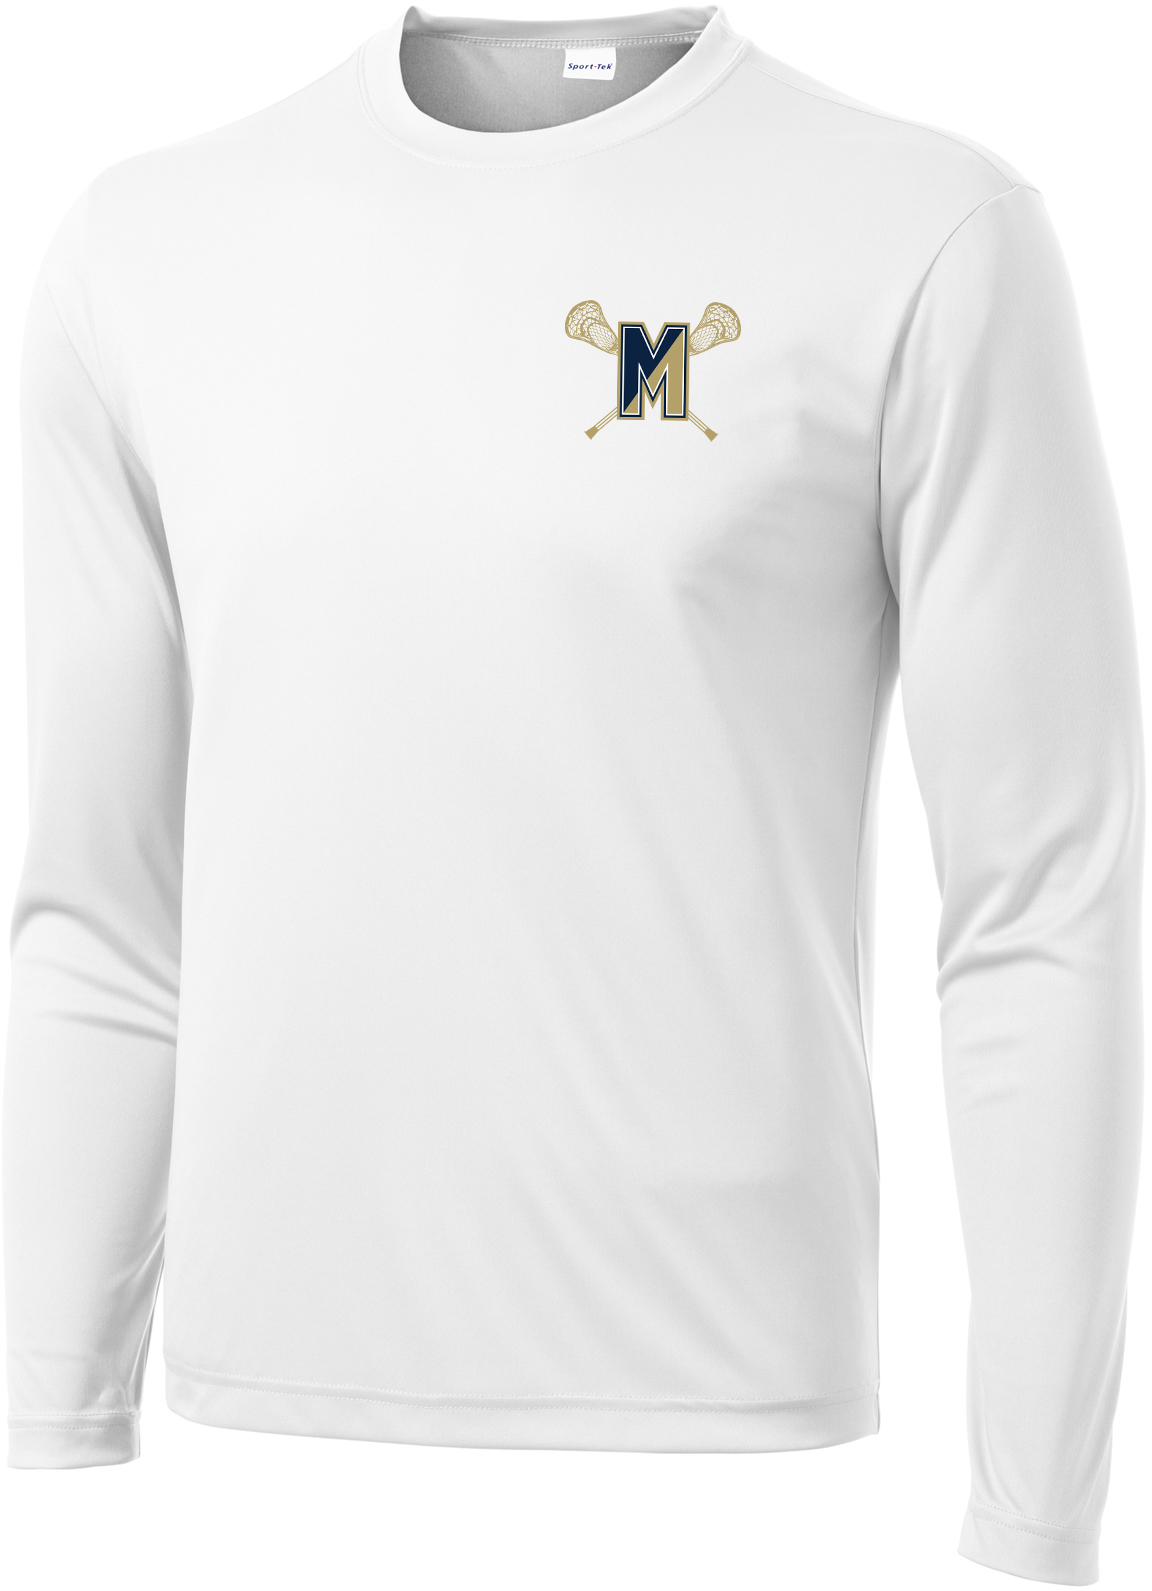 Malden Lacrosse Long Sleeve Performance Shirt